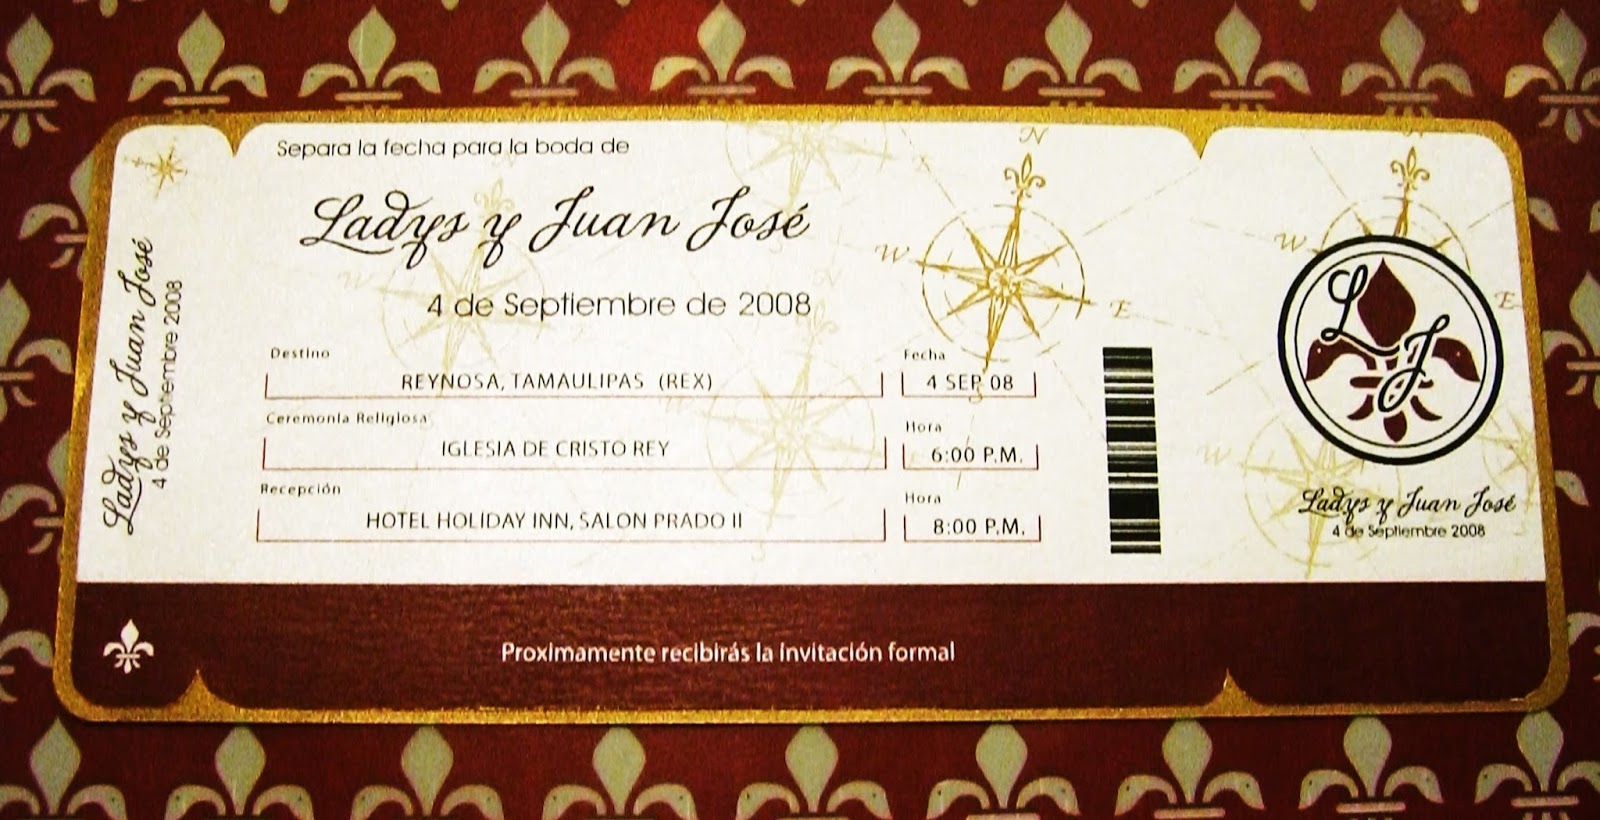 Name Design Your Own Wedding Invitations Jpg Resolution Wallpaper